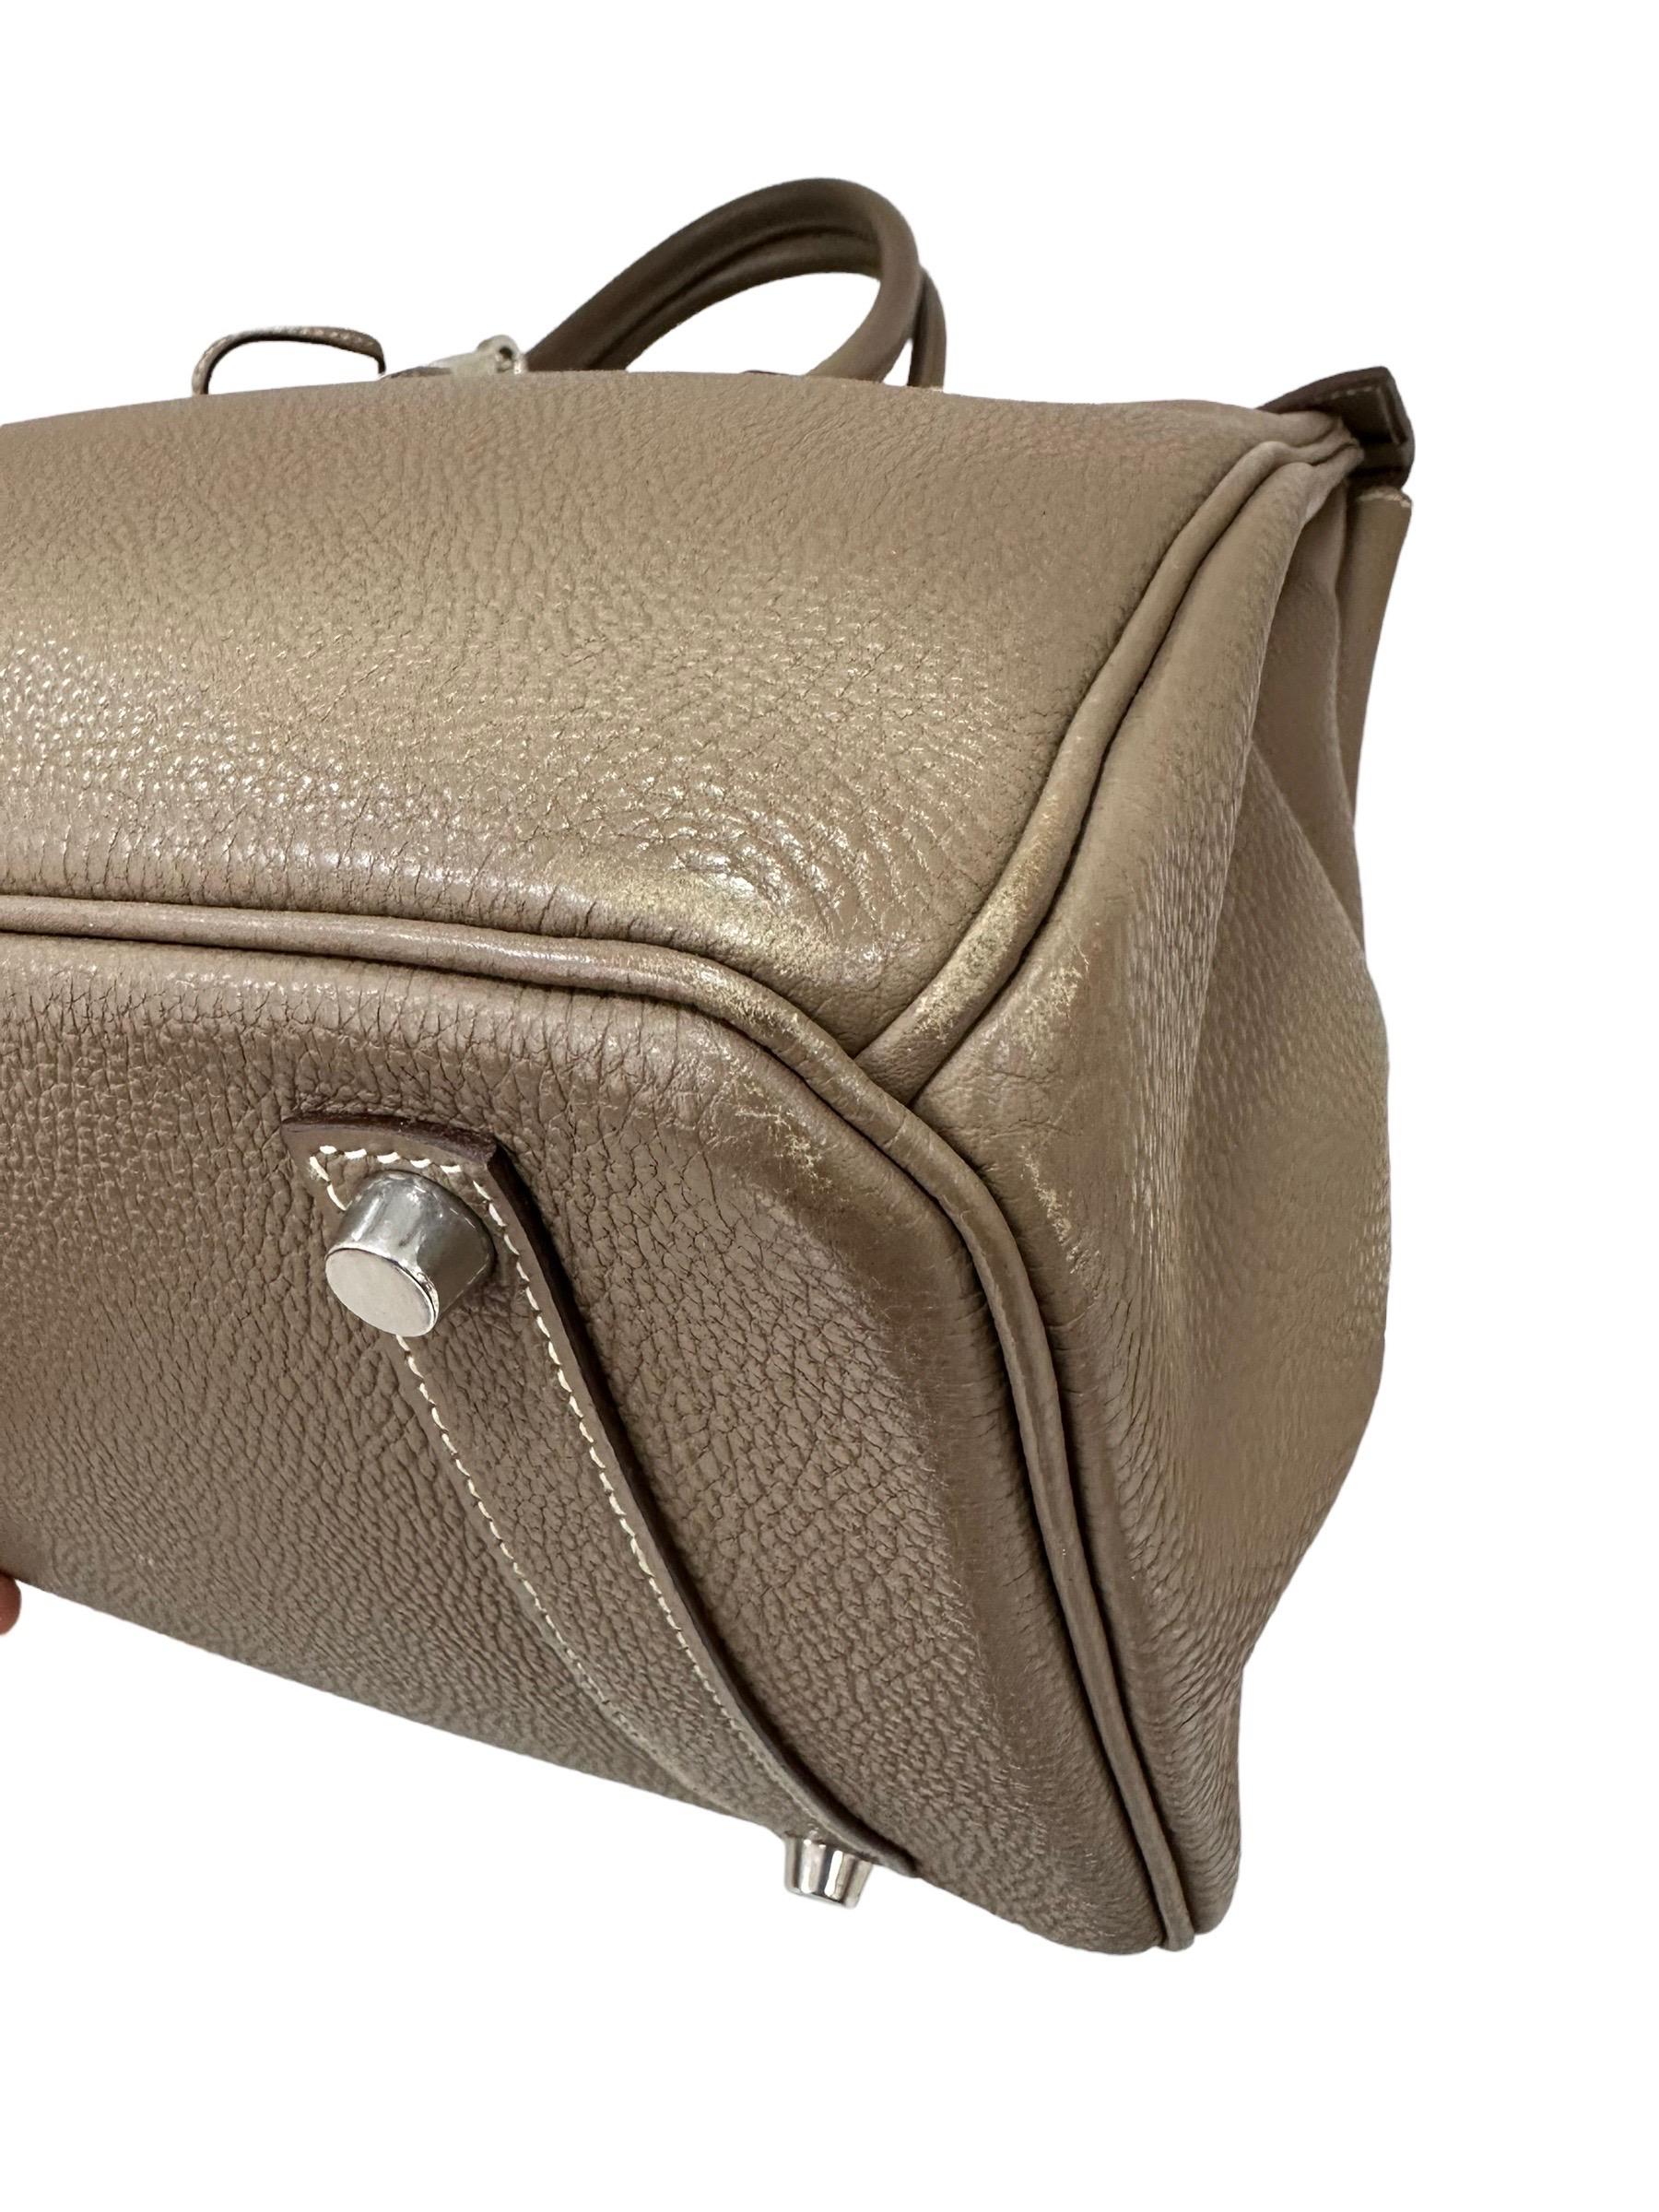 2008 Hermès Birkin 35 Togo Leather Toundra Top Handle Bag For Sale 5